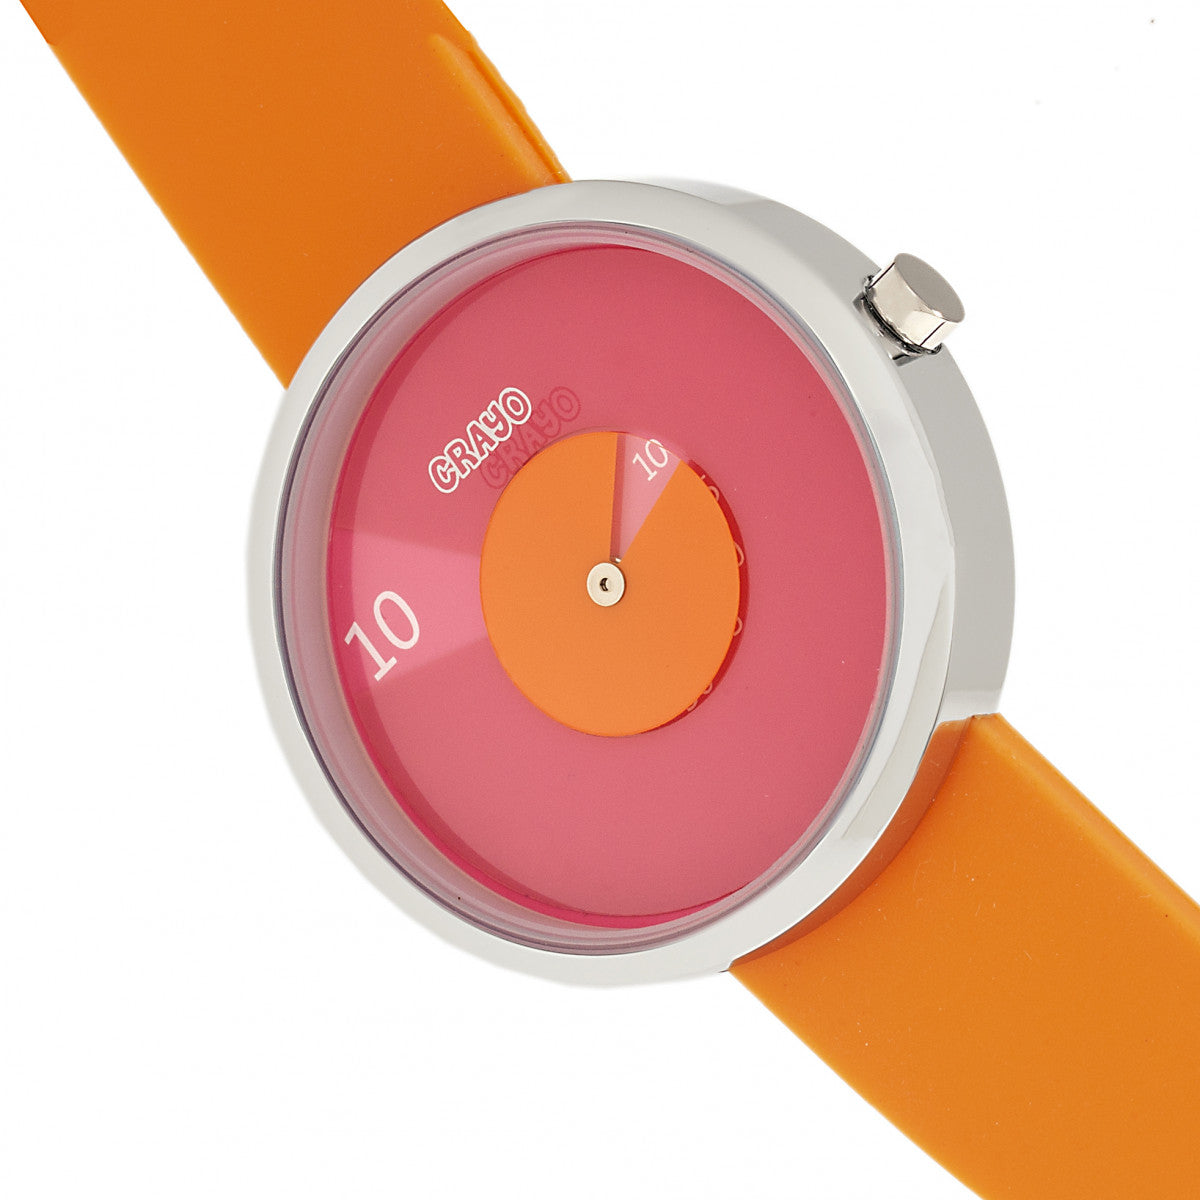 Crayo Pinwheel Unisex Watch - Orange - CRACR5202